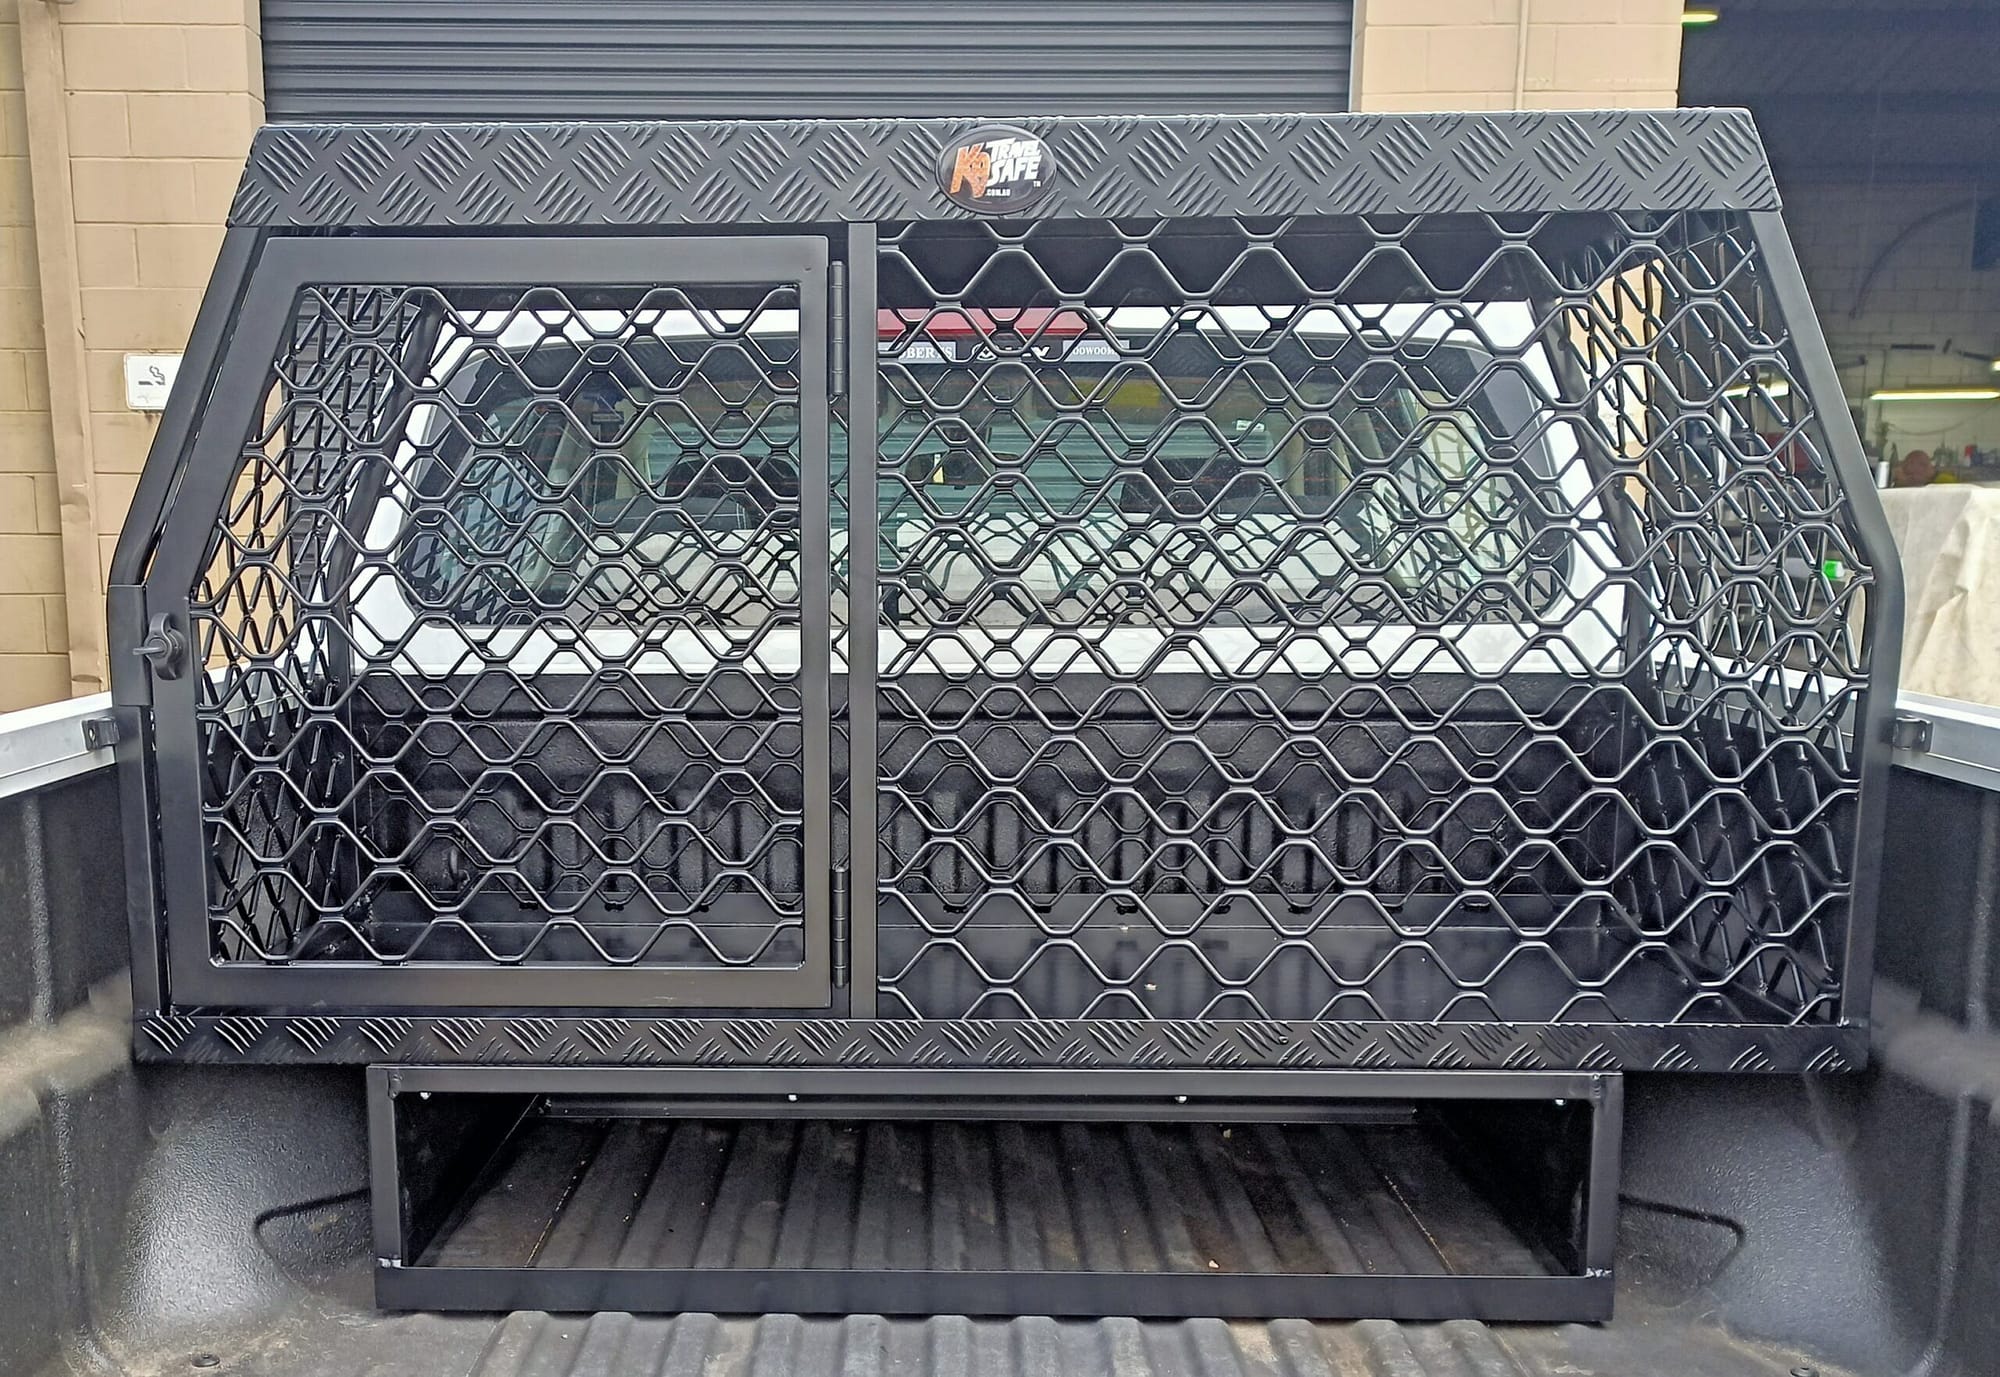 Bulldog cage for utes